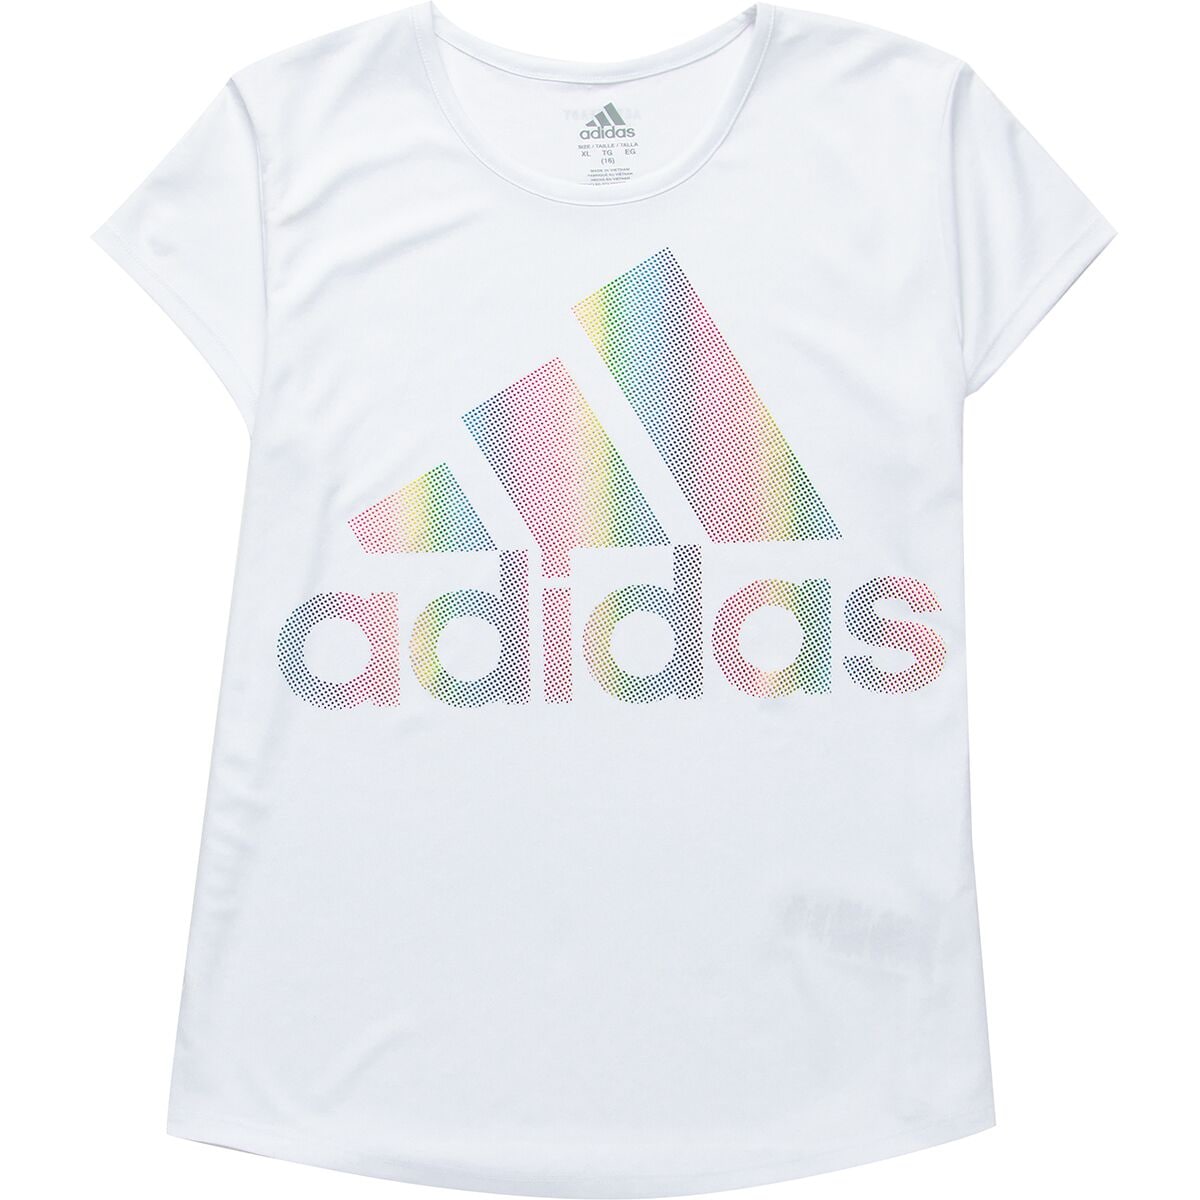 Adidas Rainbow Foil Girls' - Kids